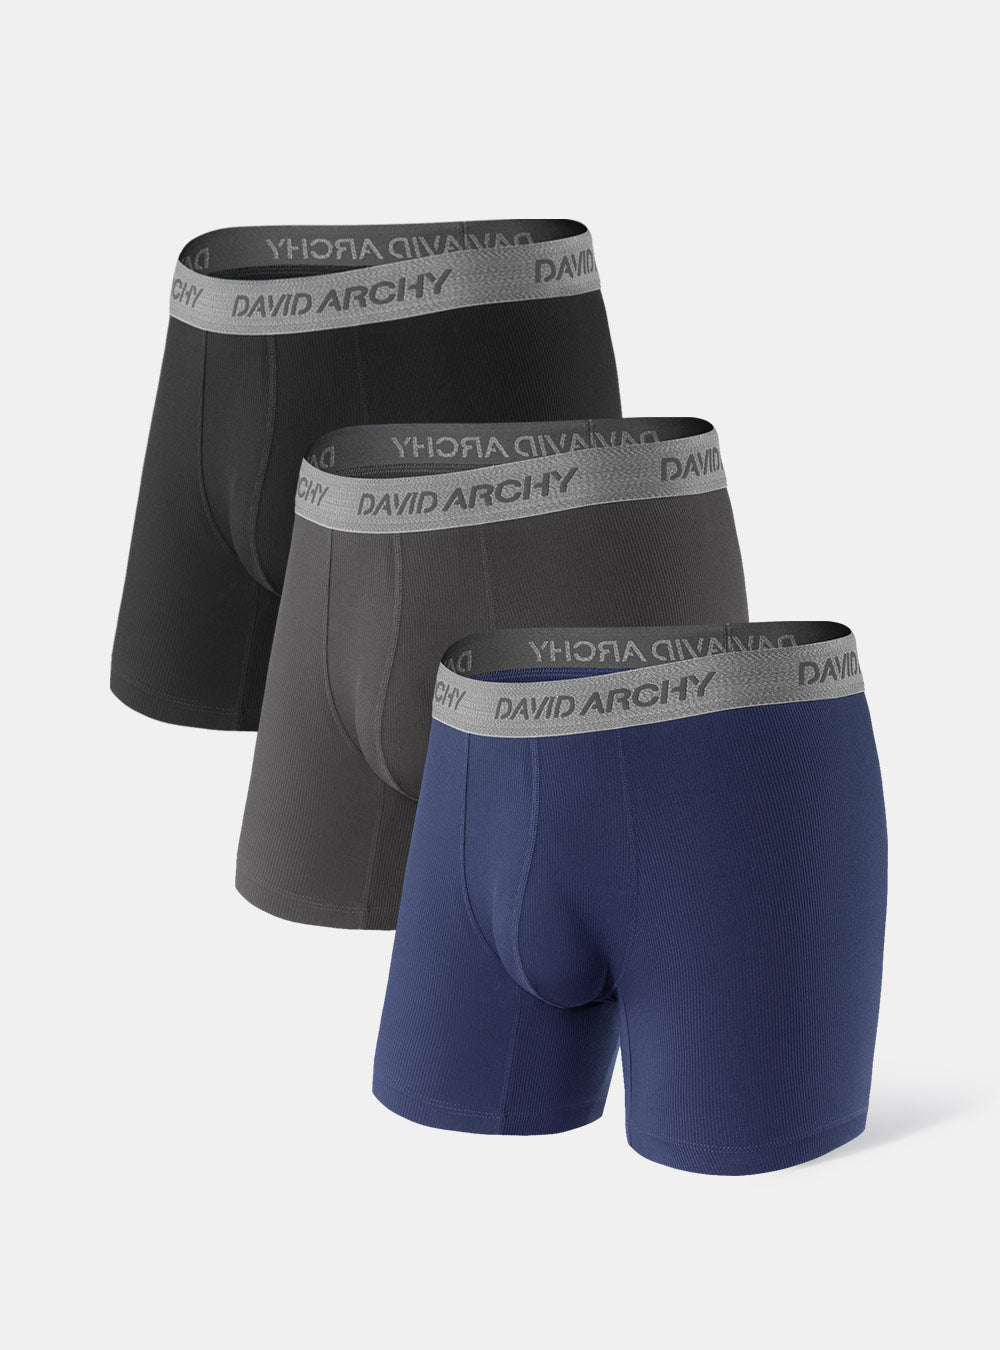 MoFiz 3-Pack Men Boxer Briefs Underwear Short Trunks Breathable Pouch  Bottom